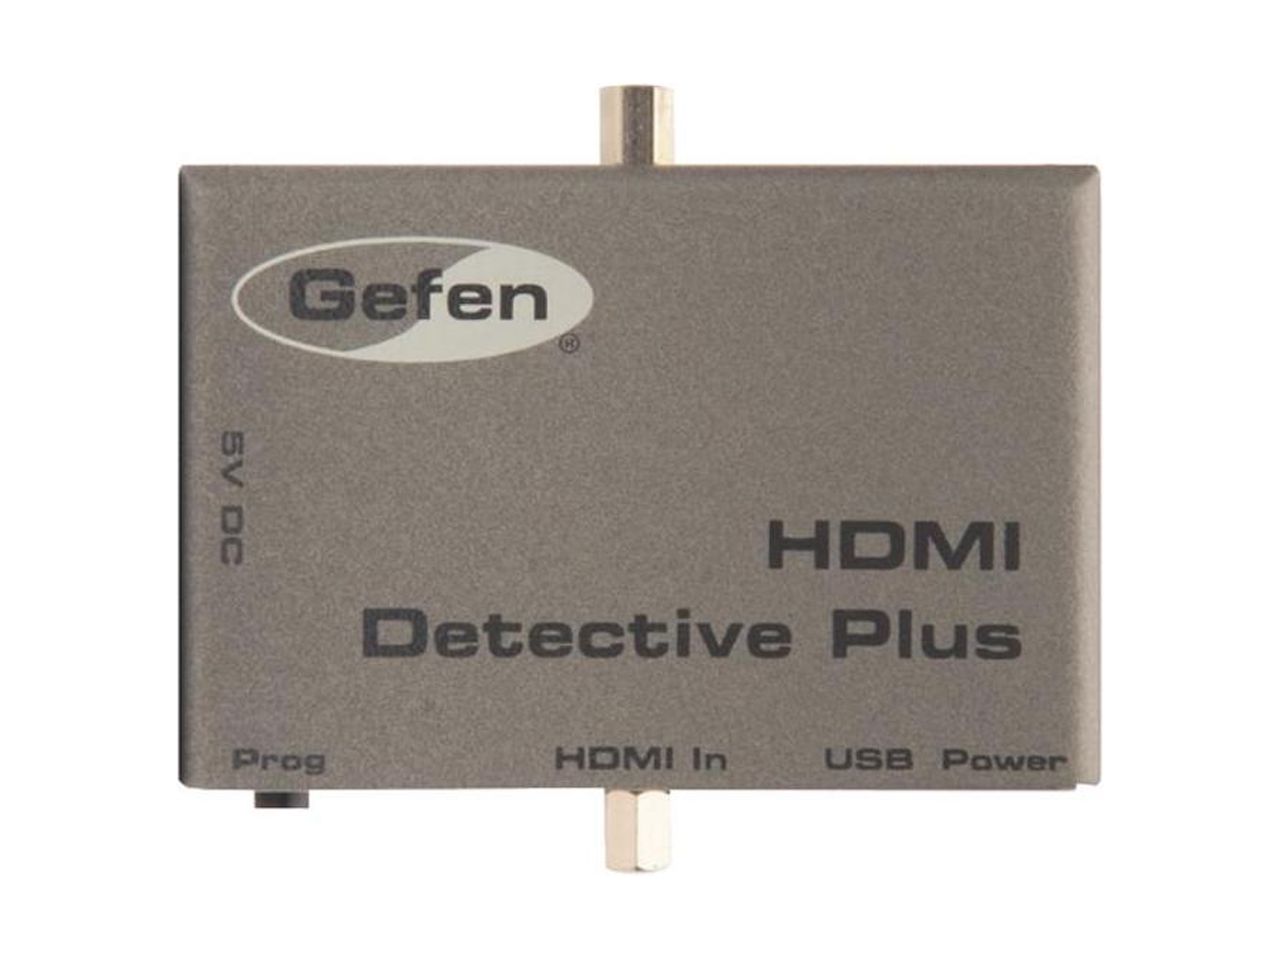 Gefen Hdmi Detective Plus - image 3 of 14